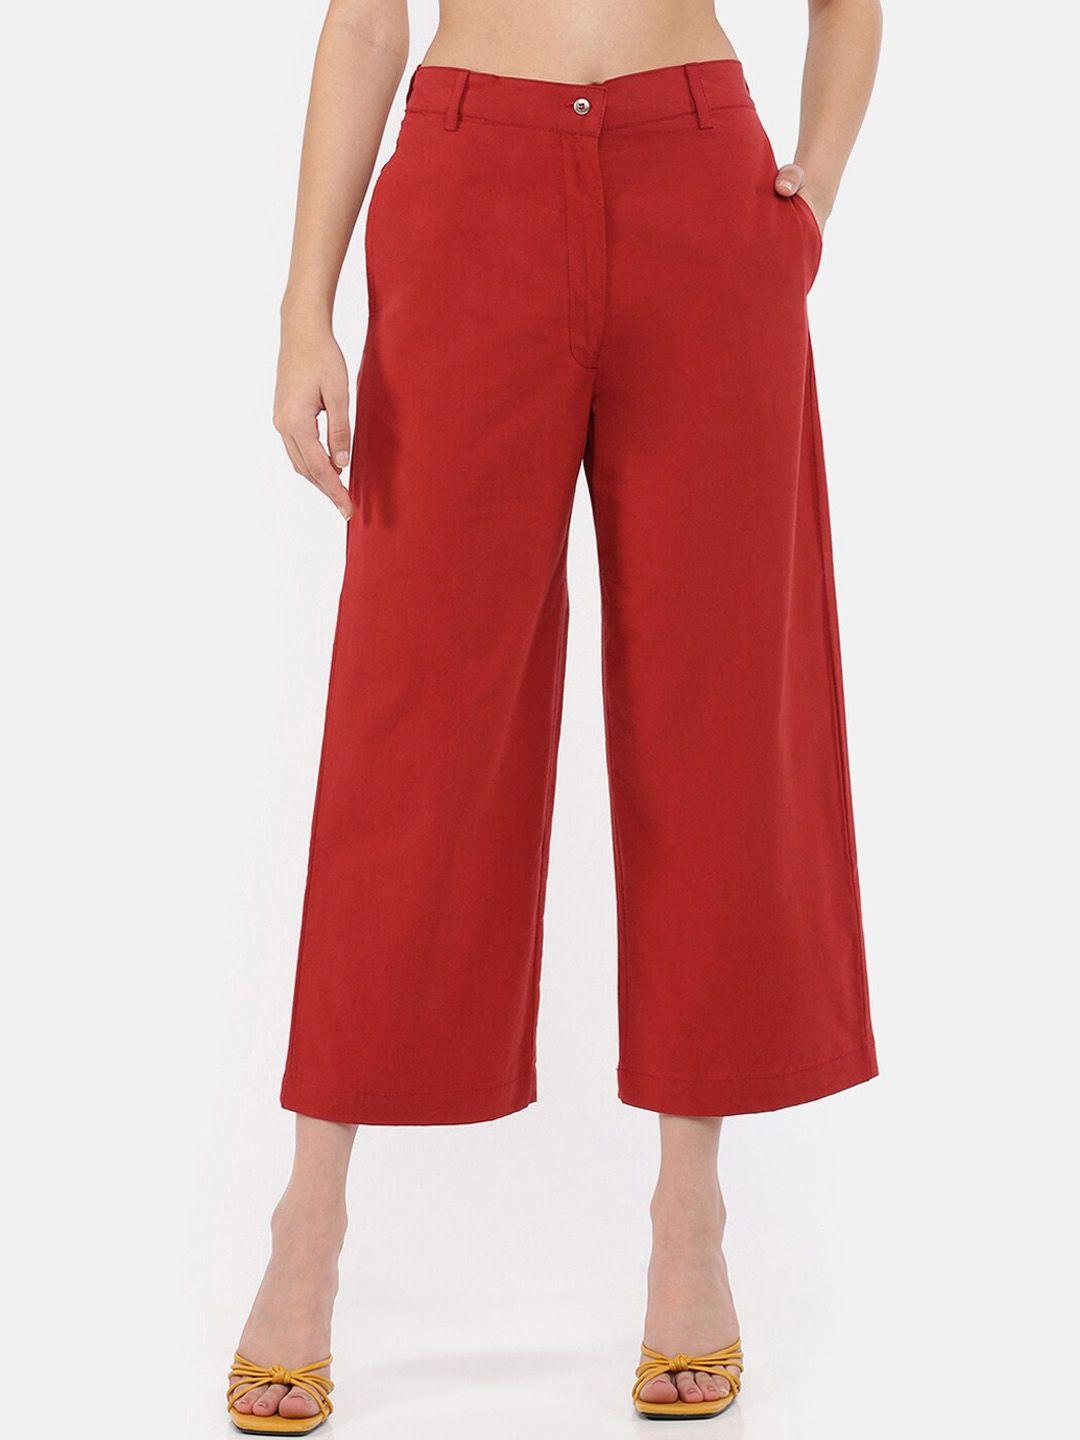 grass by gitika goyal women cotton smart slim fit high-rise culottes trousers